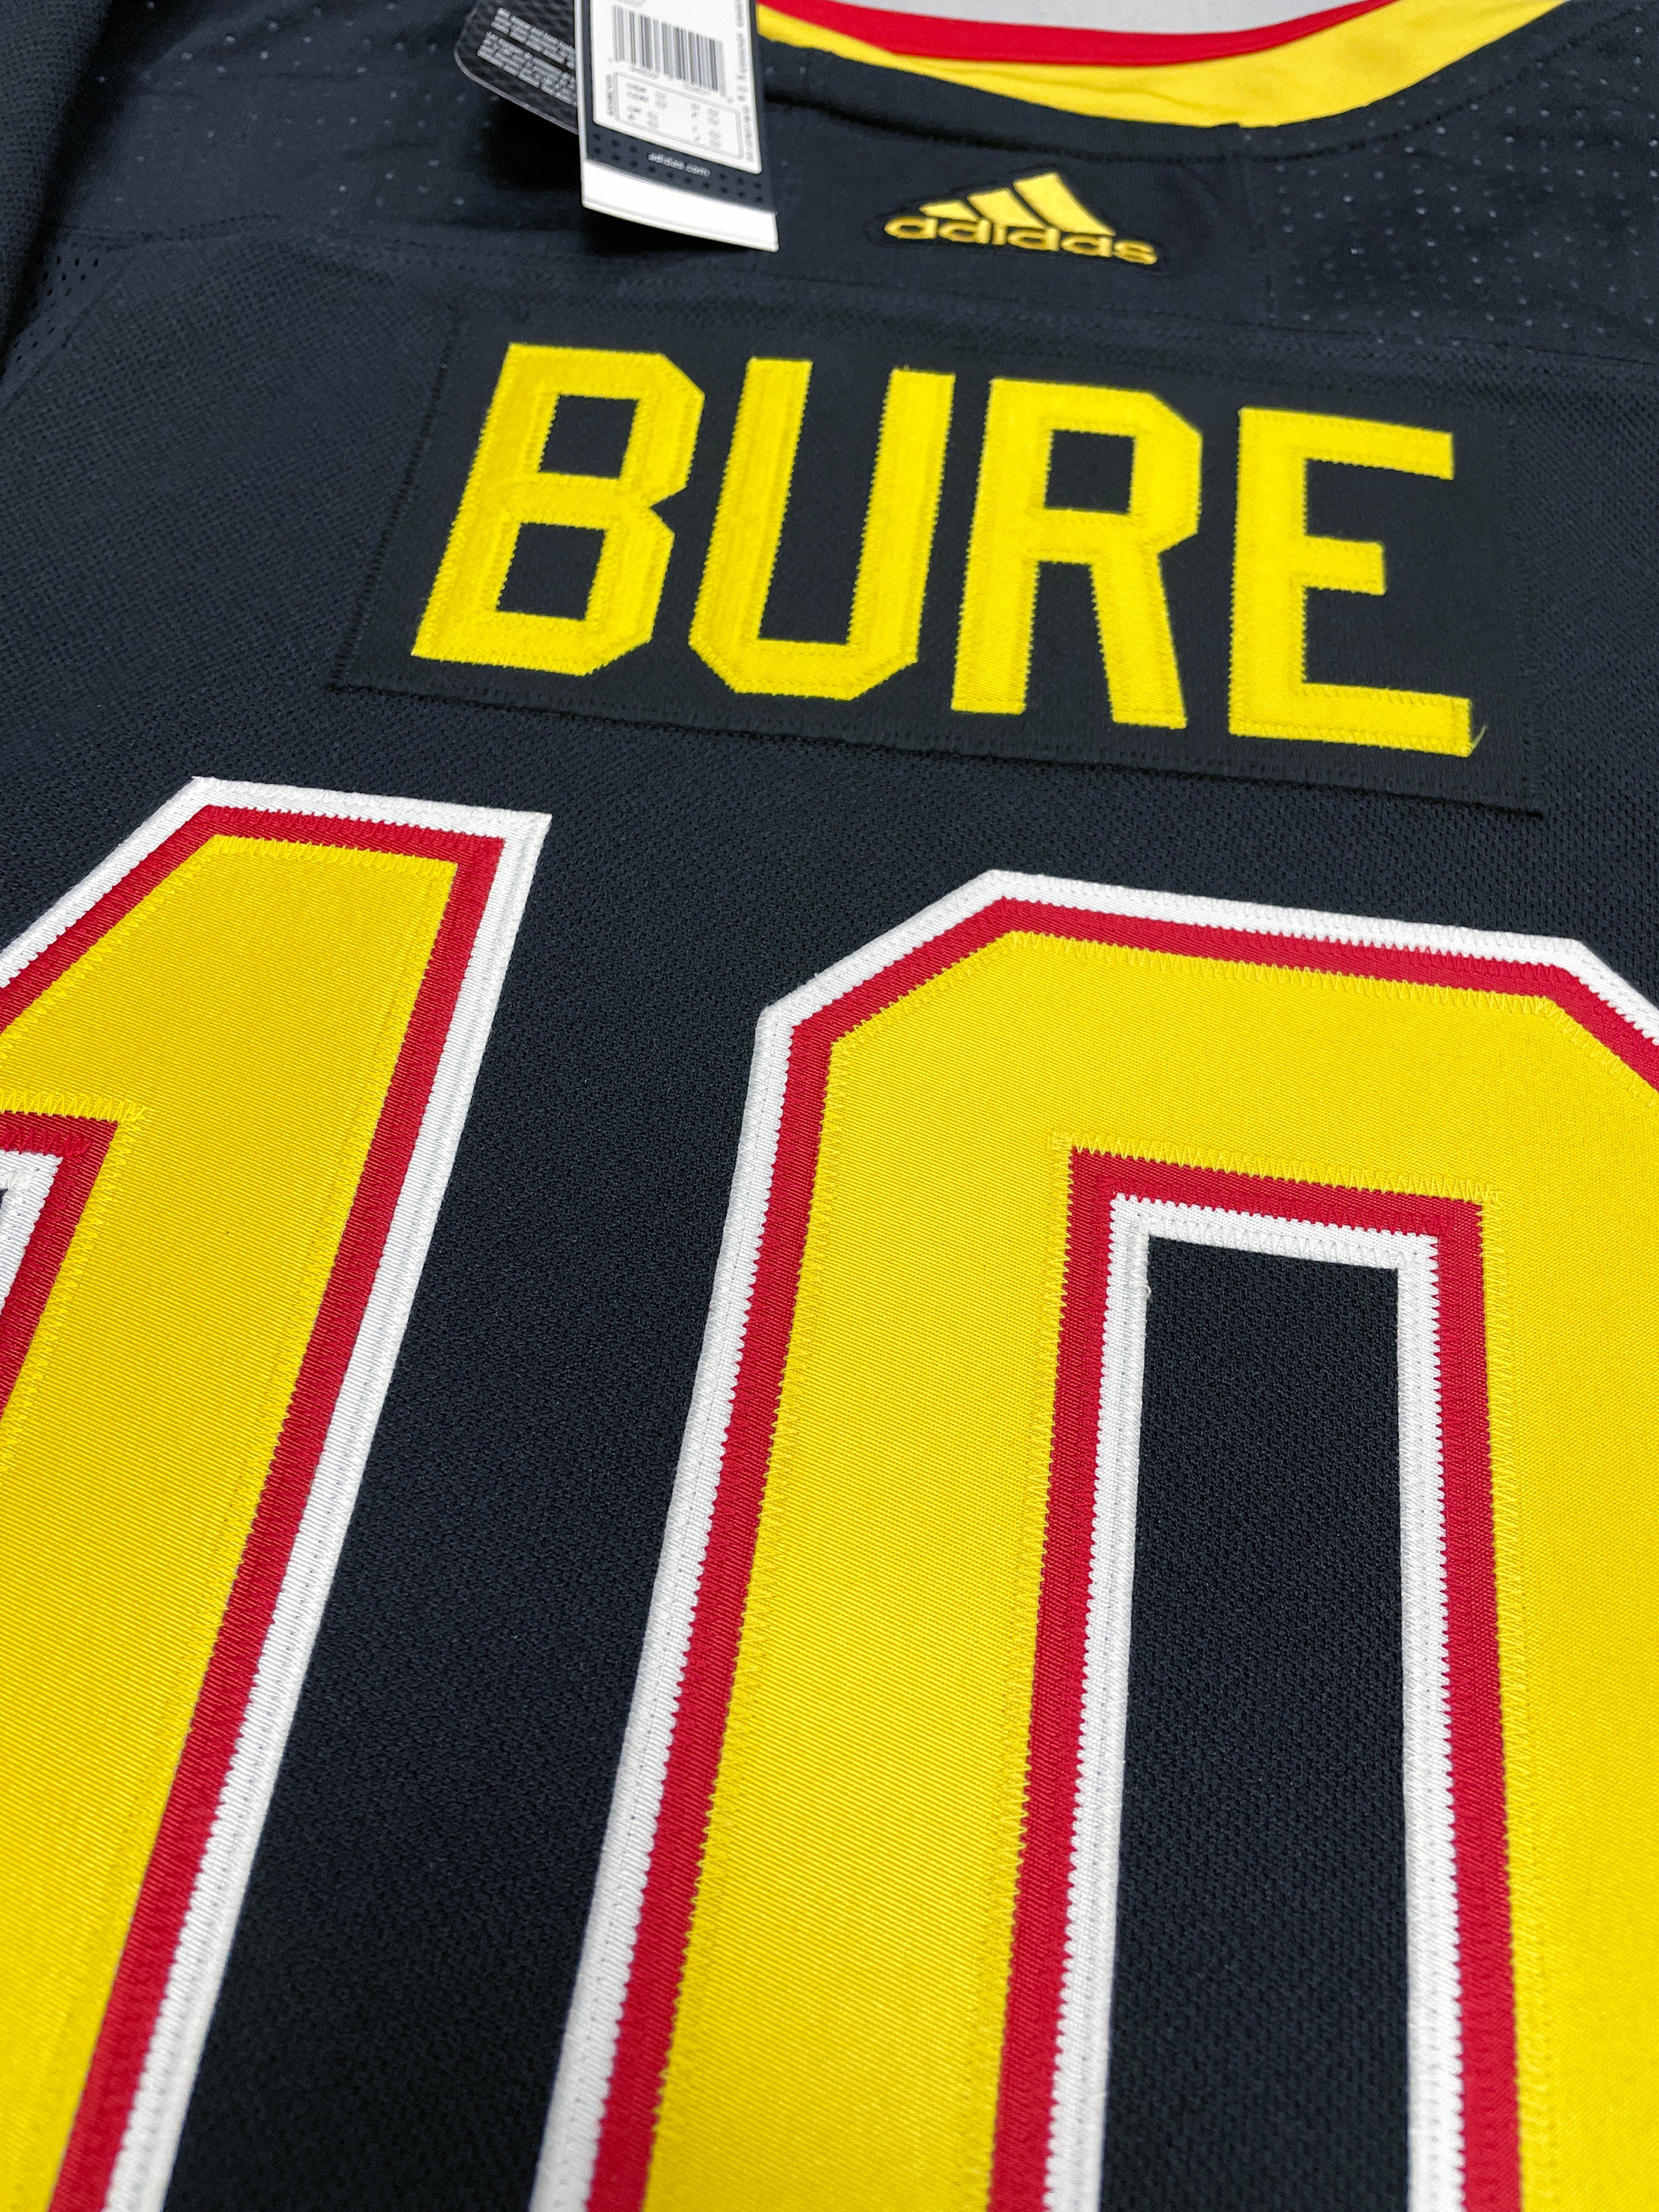 PAVEL BURE VANCOUVER CANUCKS RETRO BLACK SKATE AUTHENTIC ADIDAS NHL JE –  Hockey Authentic